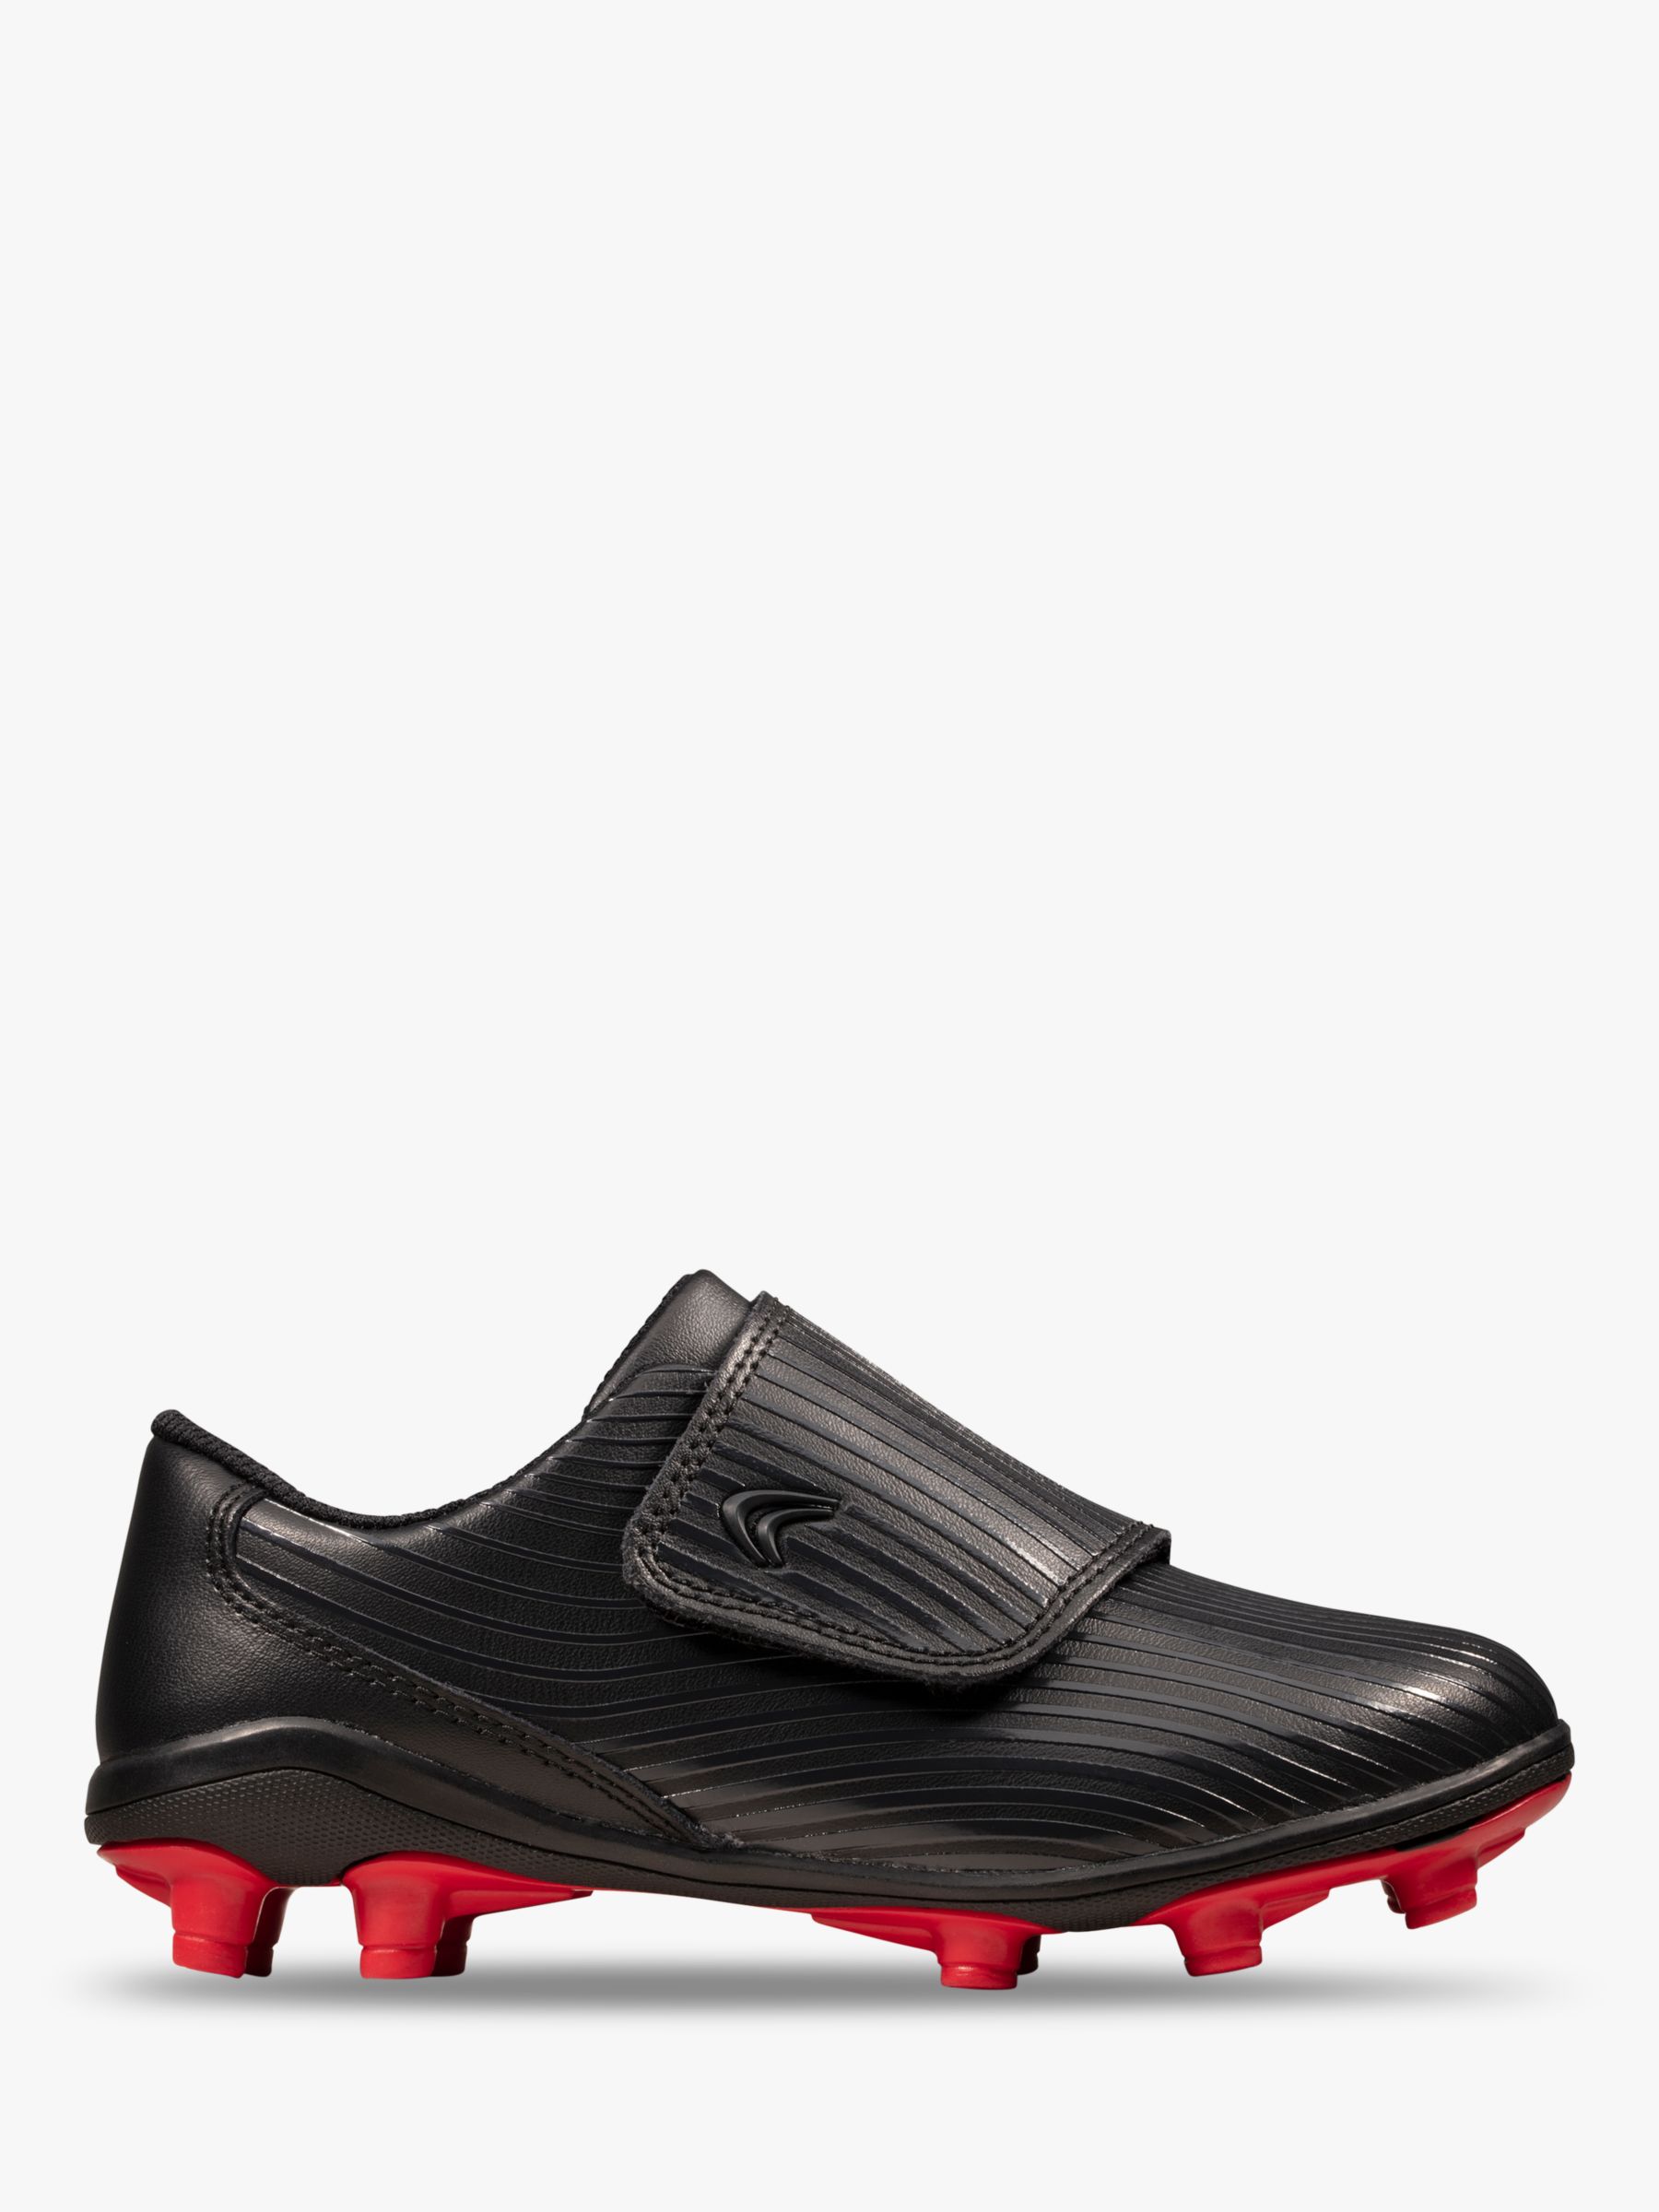 clarks football boots